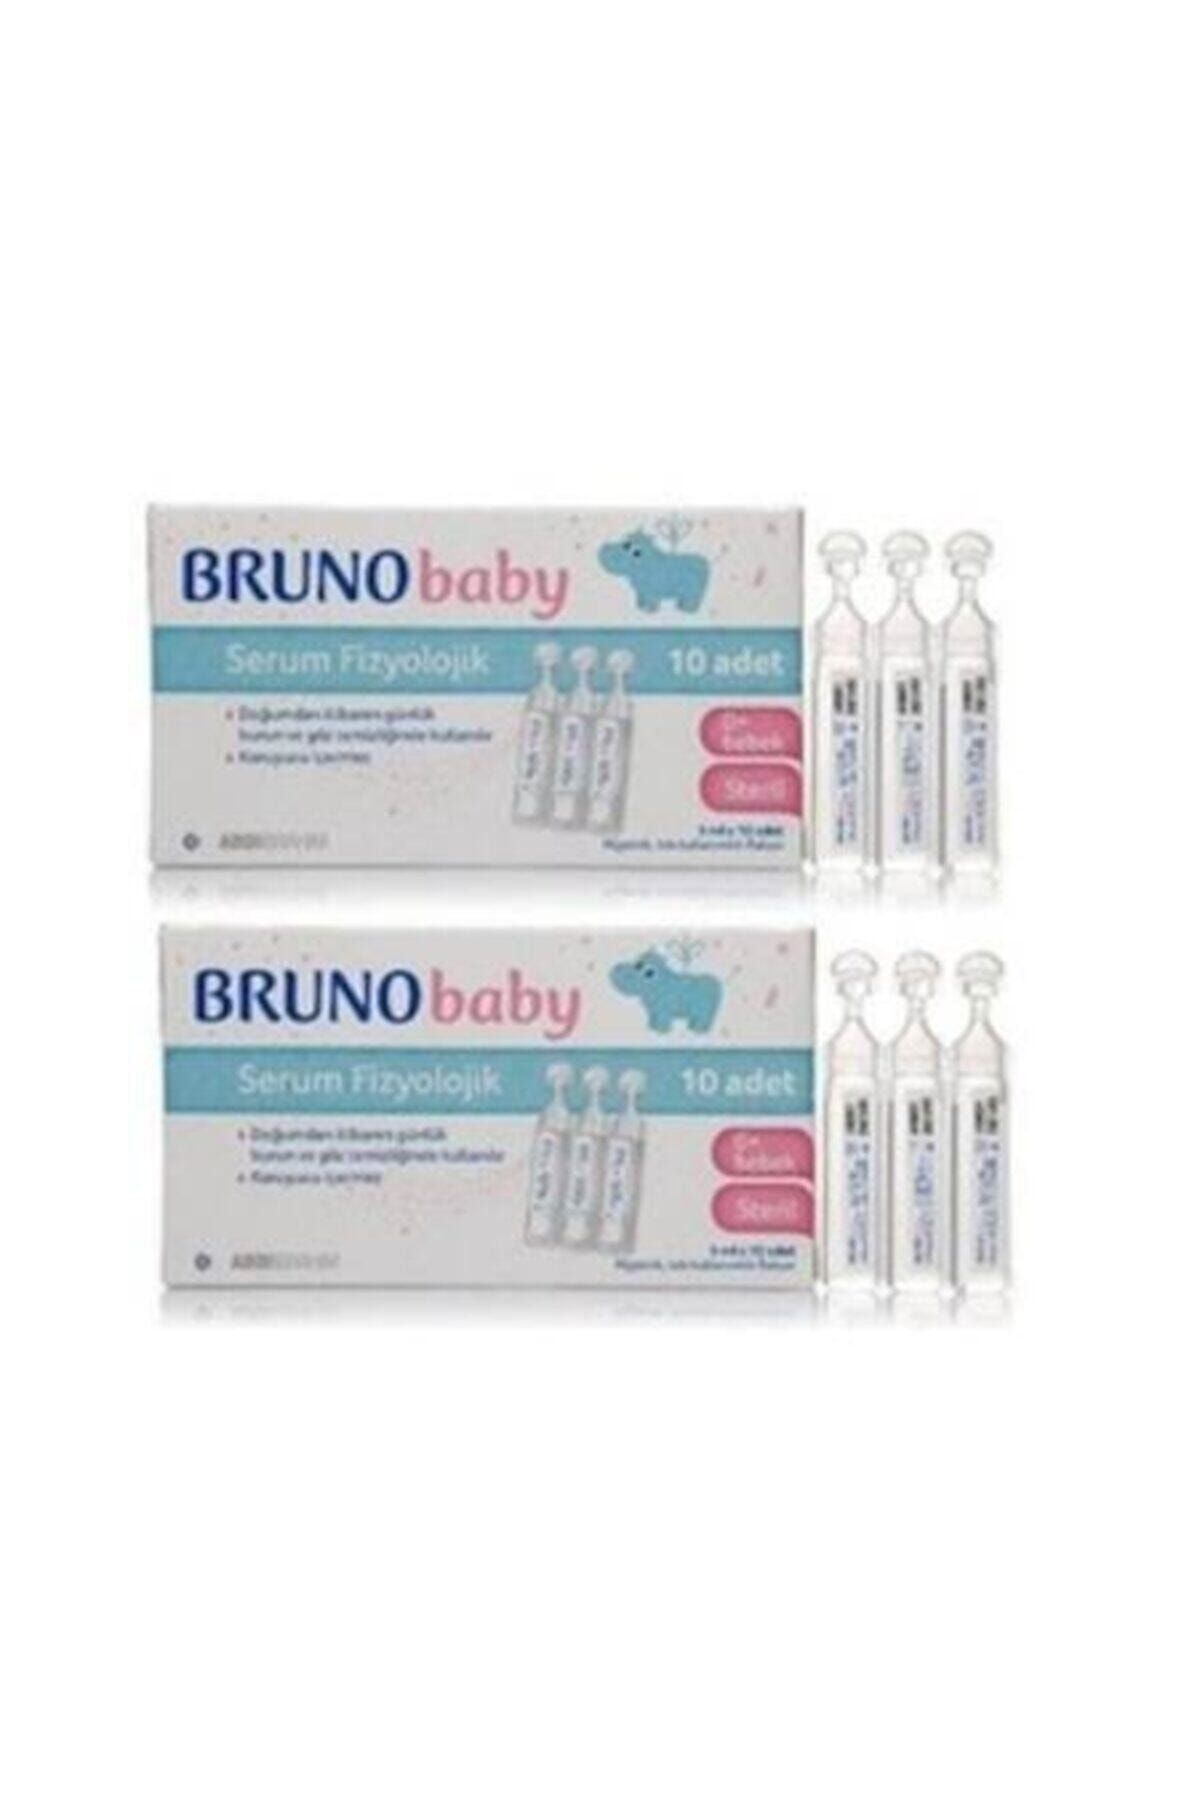 Bruno Baby Bruno Serum Fizyolojik 5 Ml 10 Flakon 2 Adet